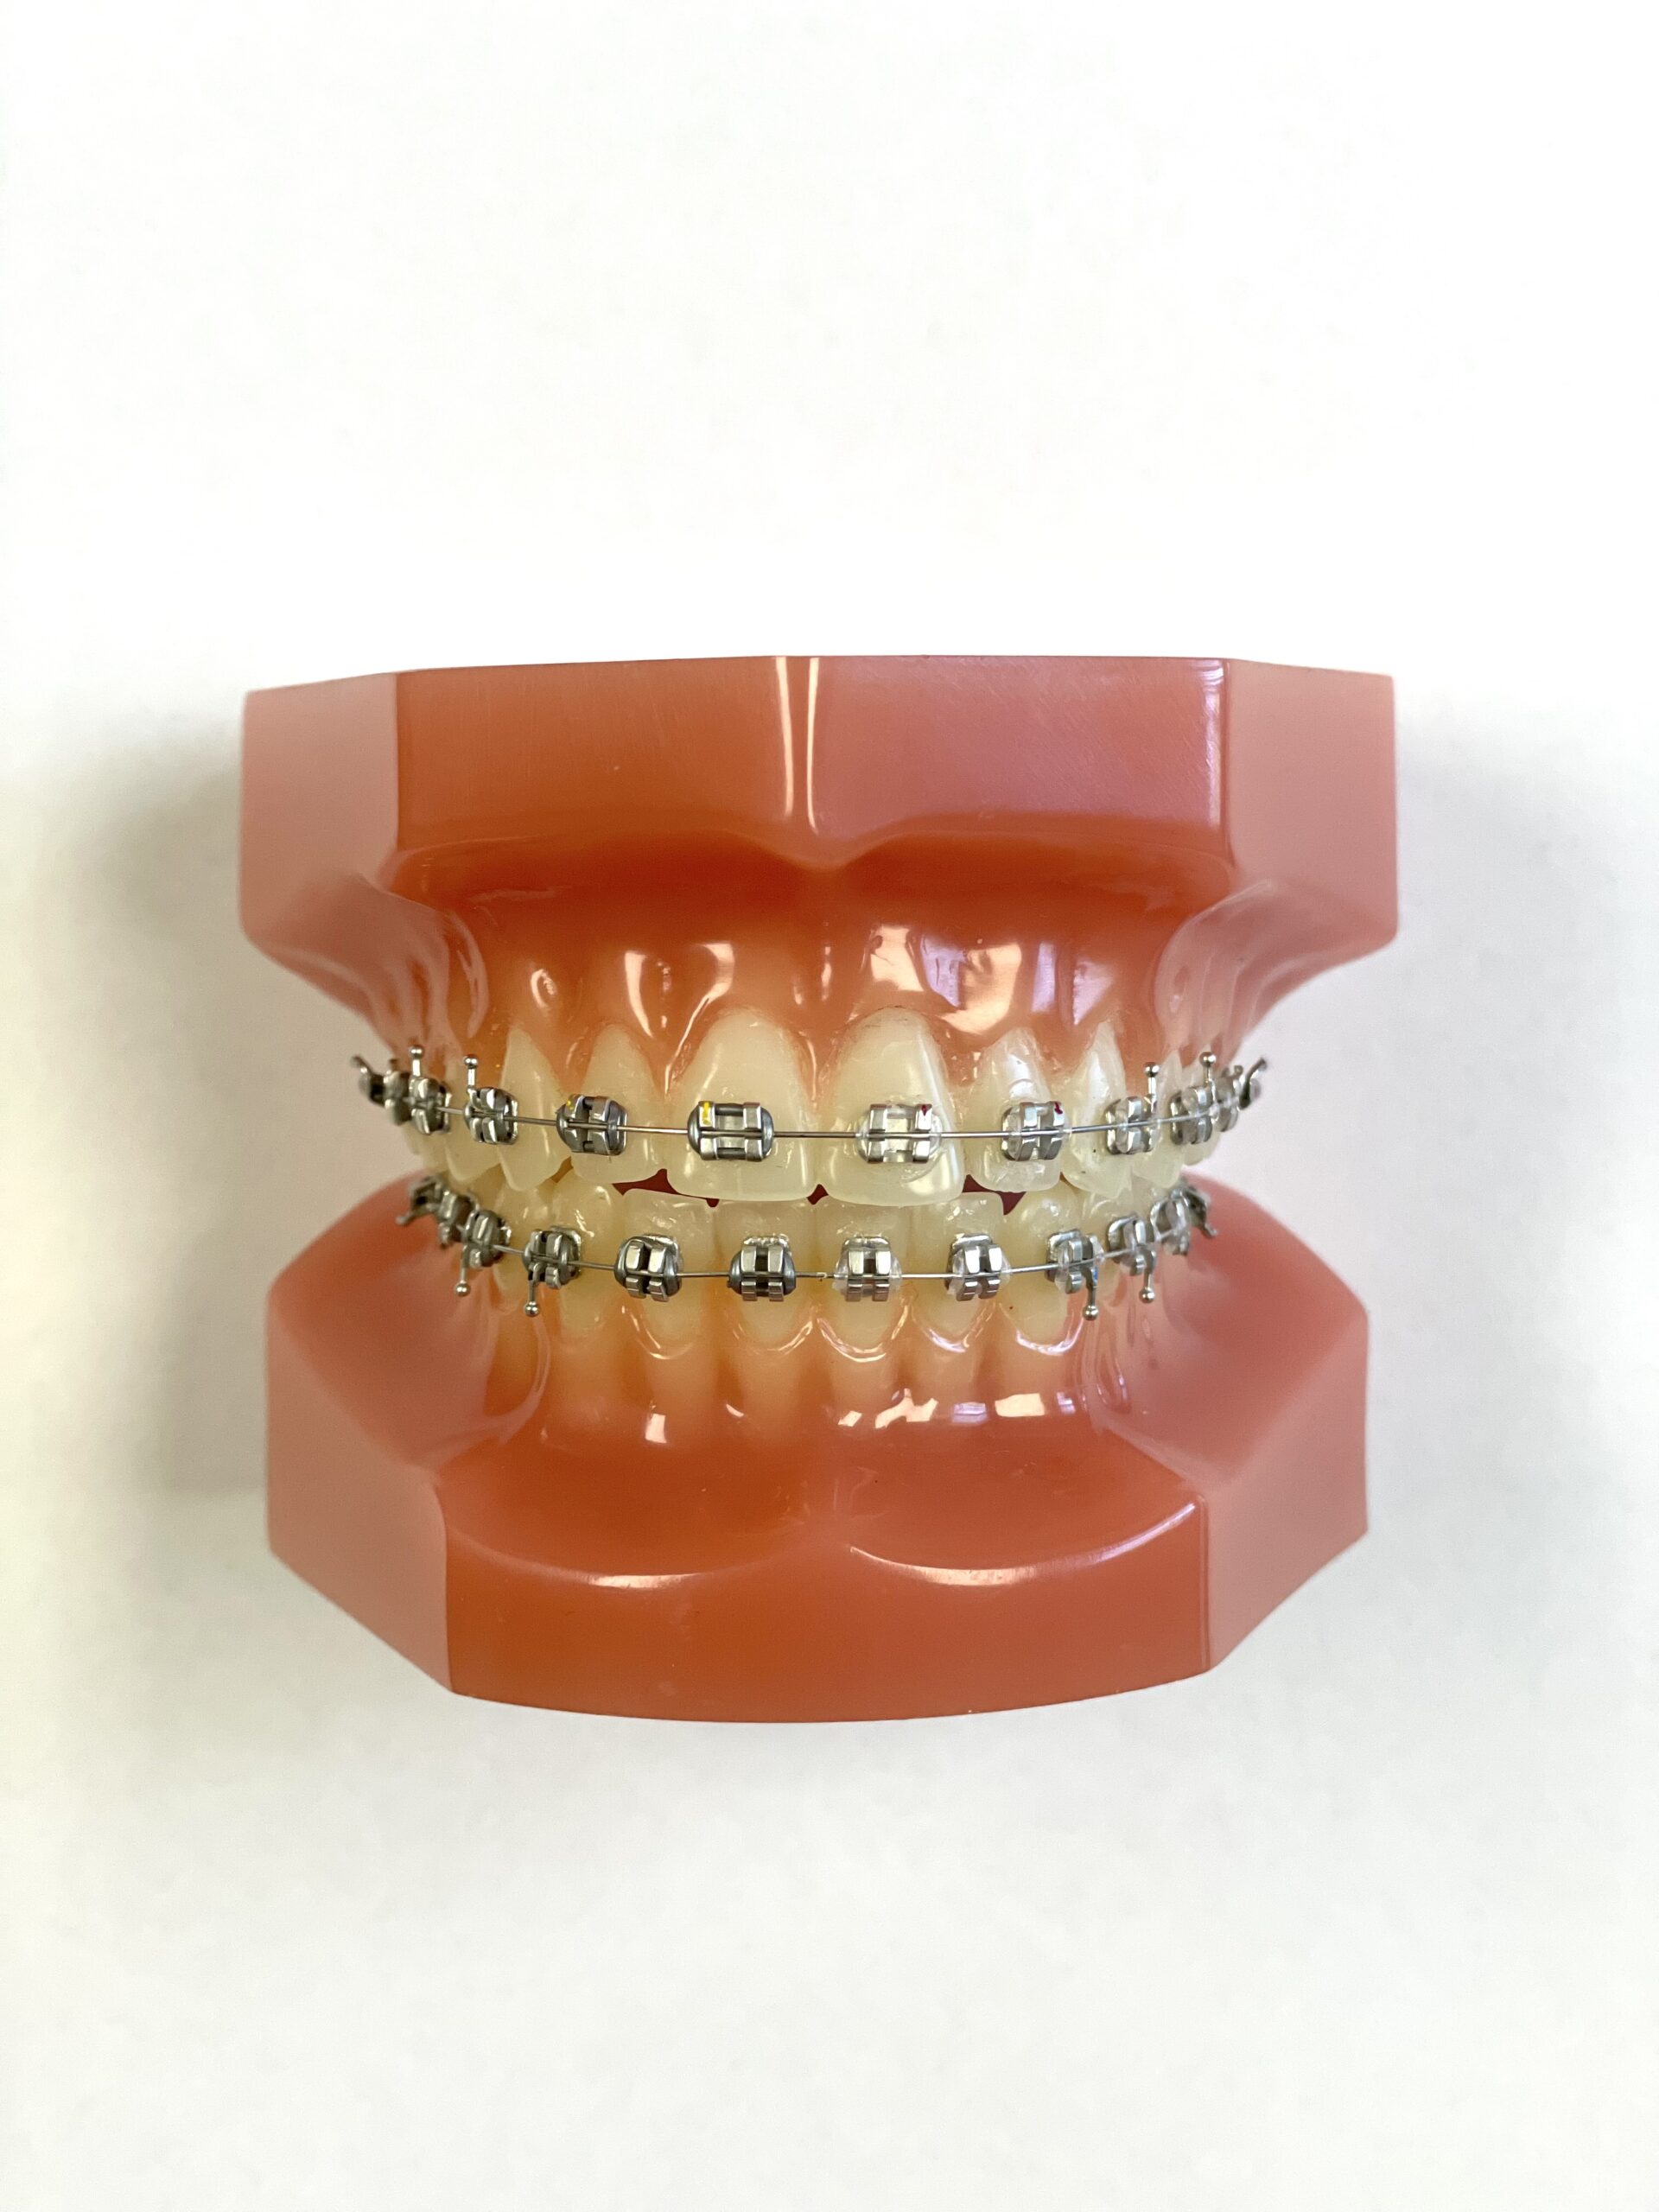 Traditional metal braces - Rhodium brackets